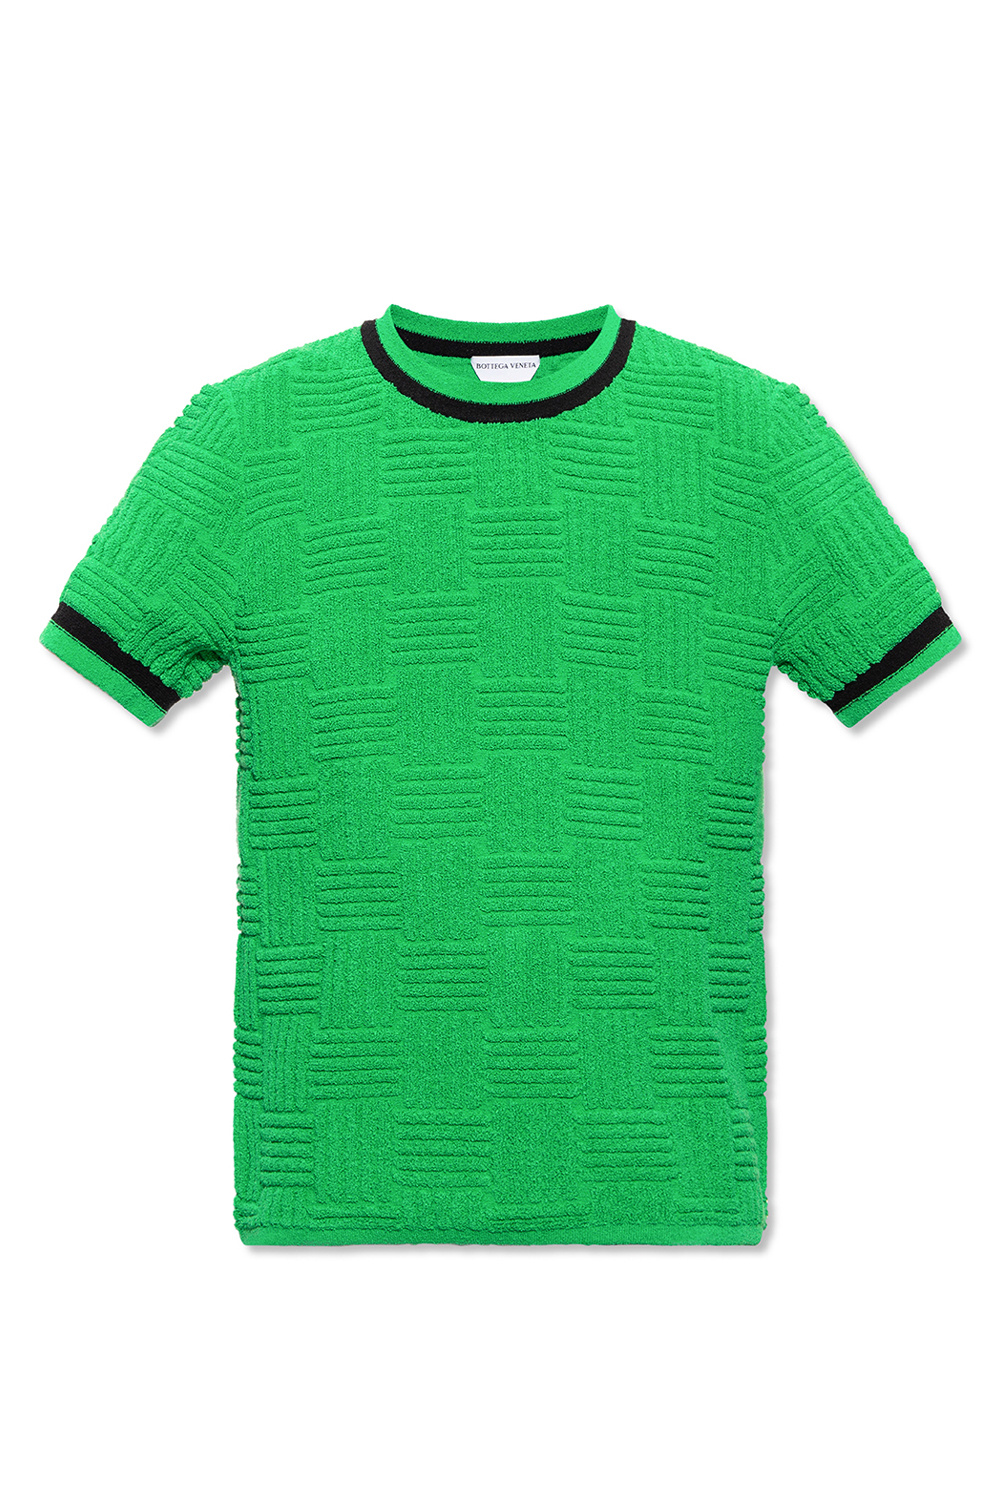 Bottega Veneta Men's Knit Crewneck T-Shirt